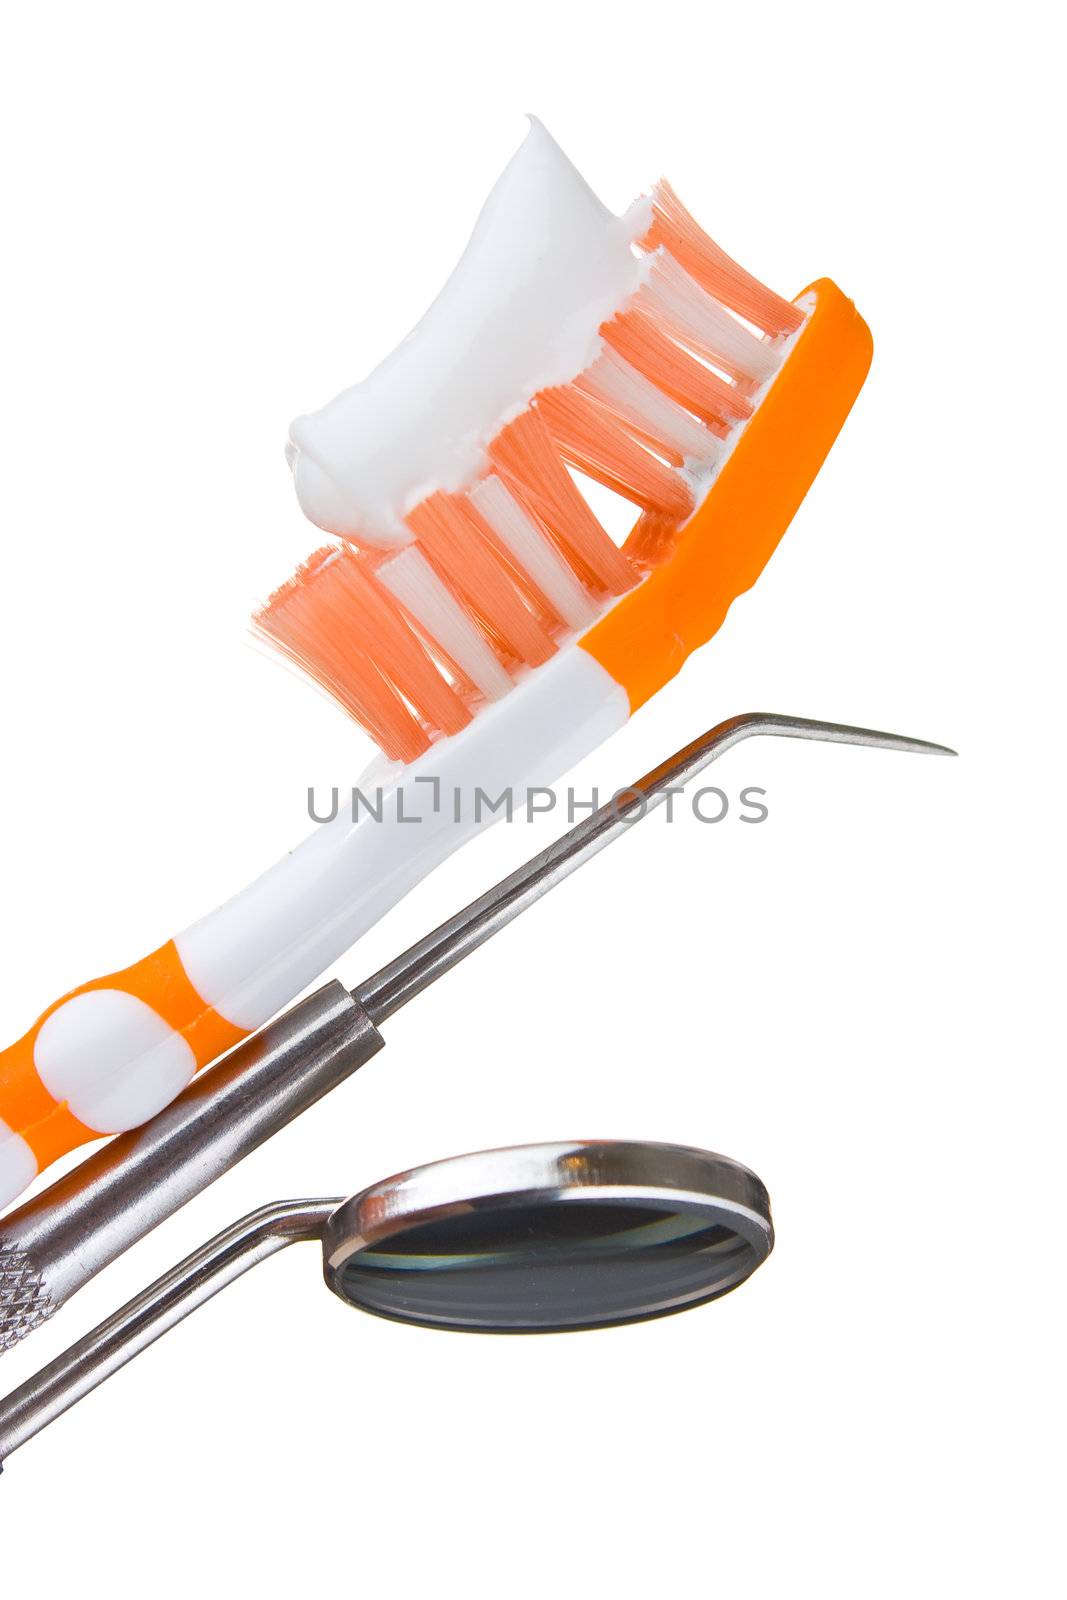 toothbrush and dental tools by oleg_zhukov